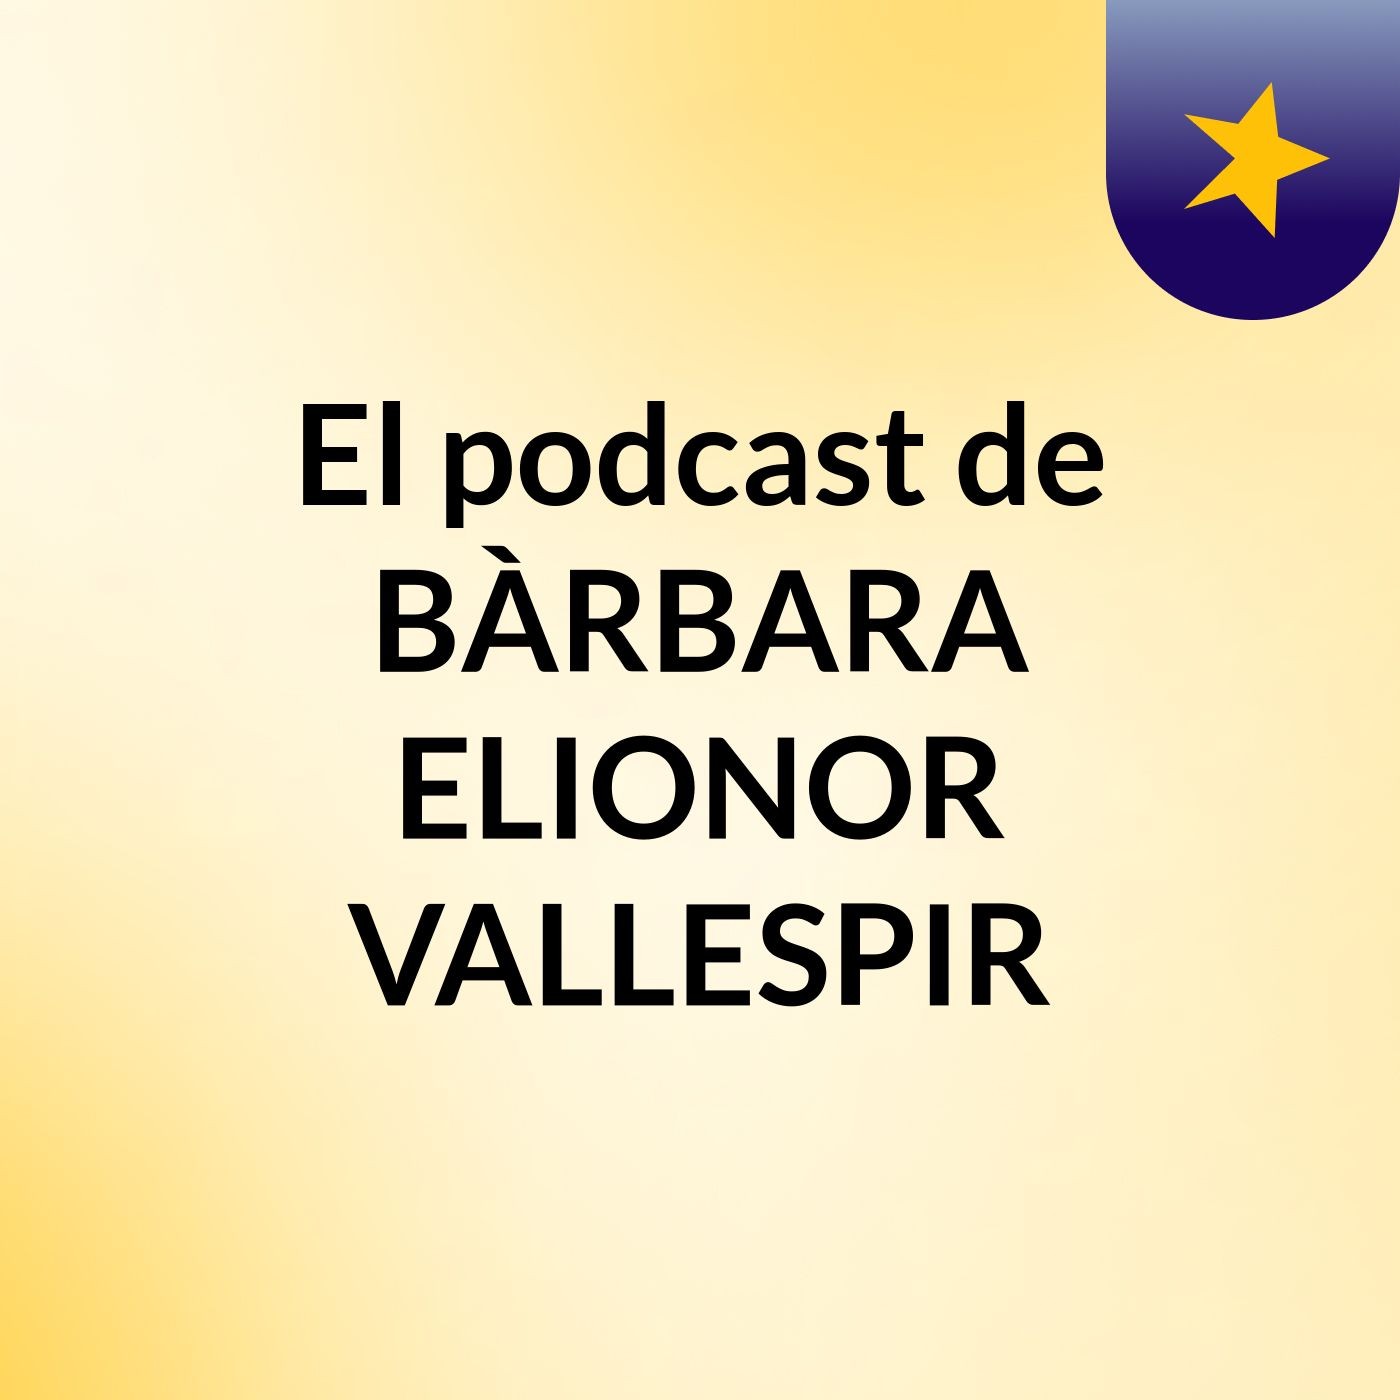 El podcast de BÀRBARA ELIONOR VALLESPIR 